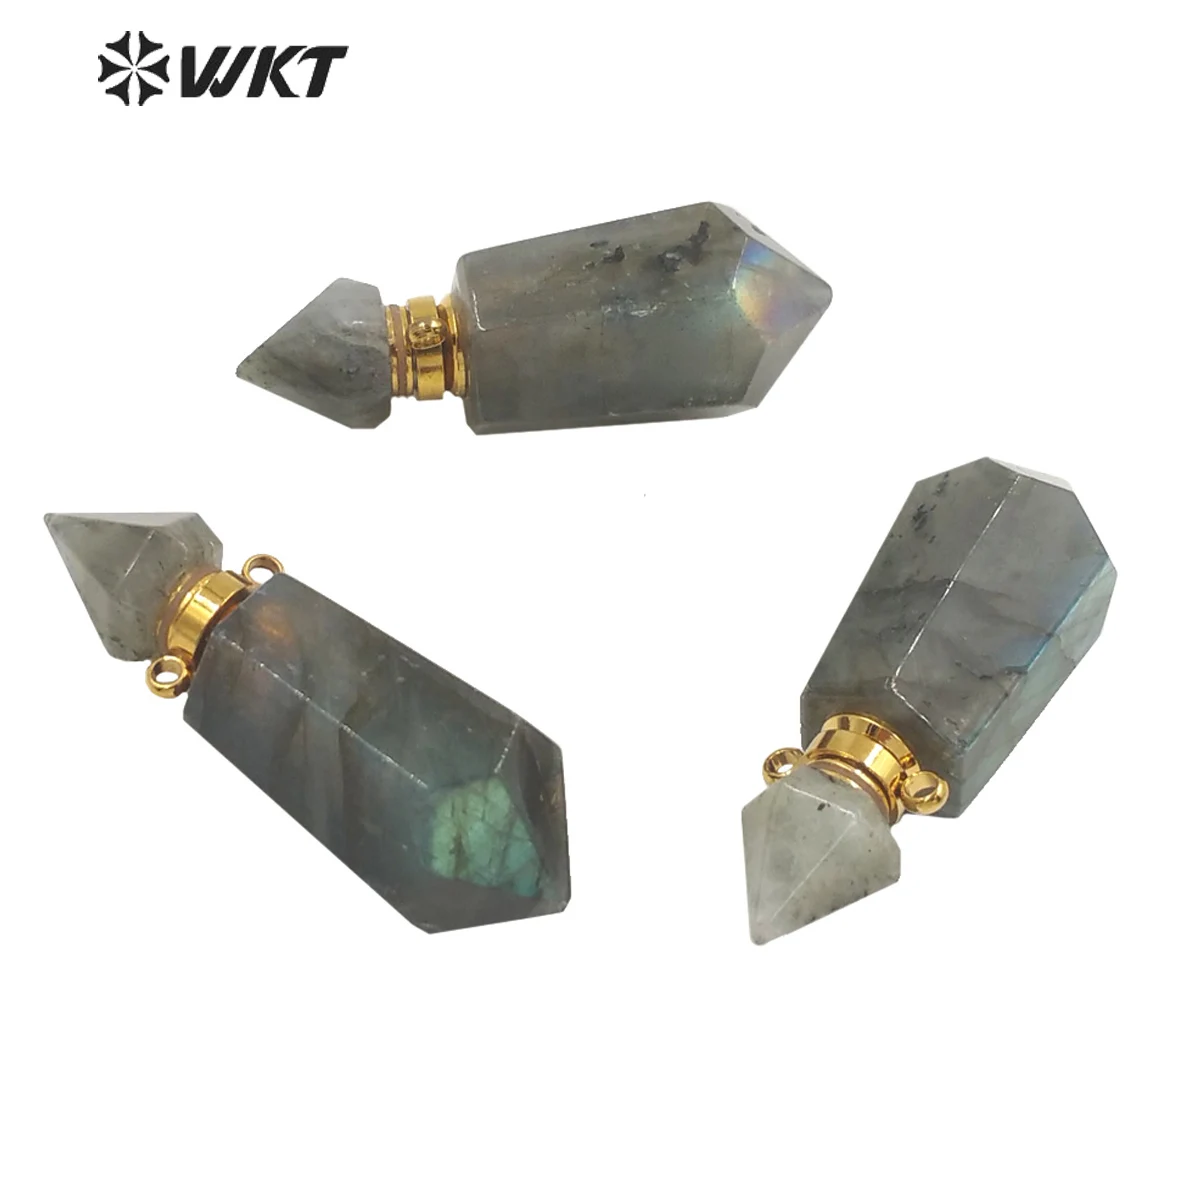 wt-p1760-wkt-superior-quality-natural-stone-perfume-bottle-pendant-labradorite-perfume-bottle-pendant-jewelry-necklace-accessory